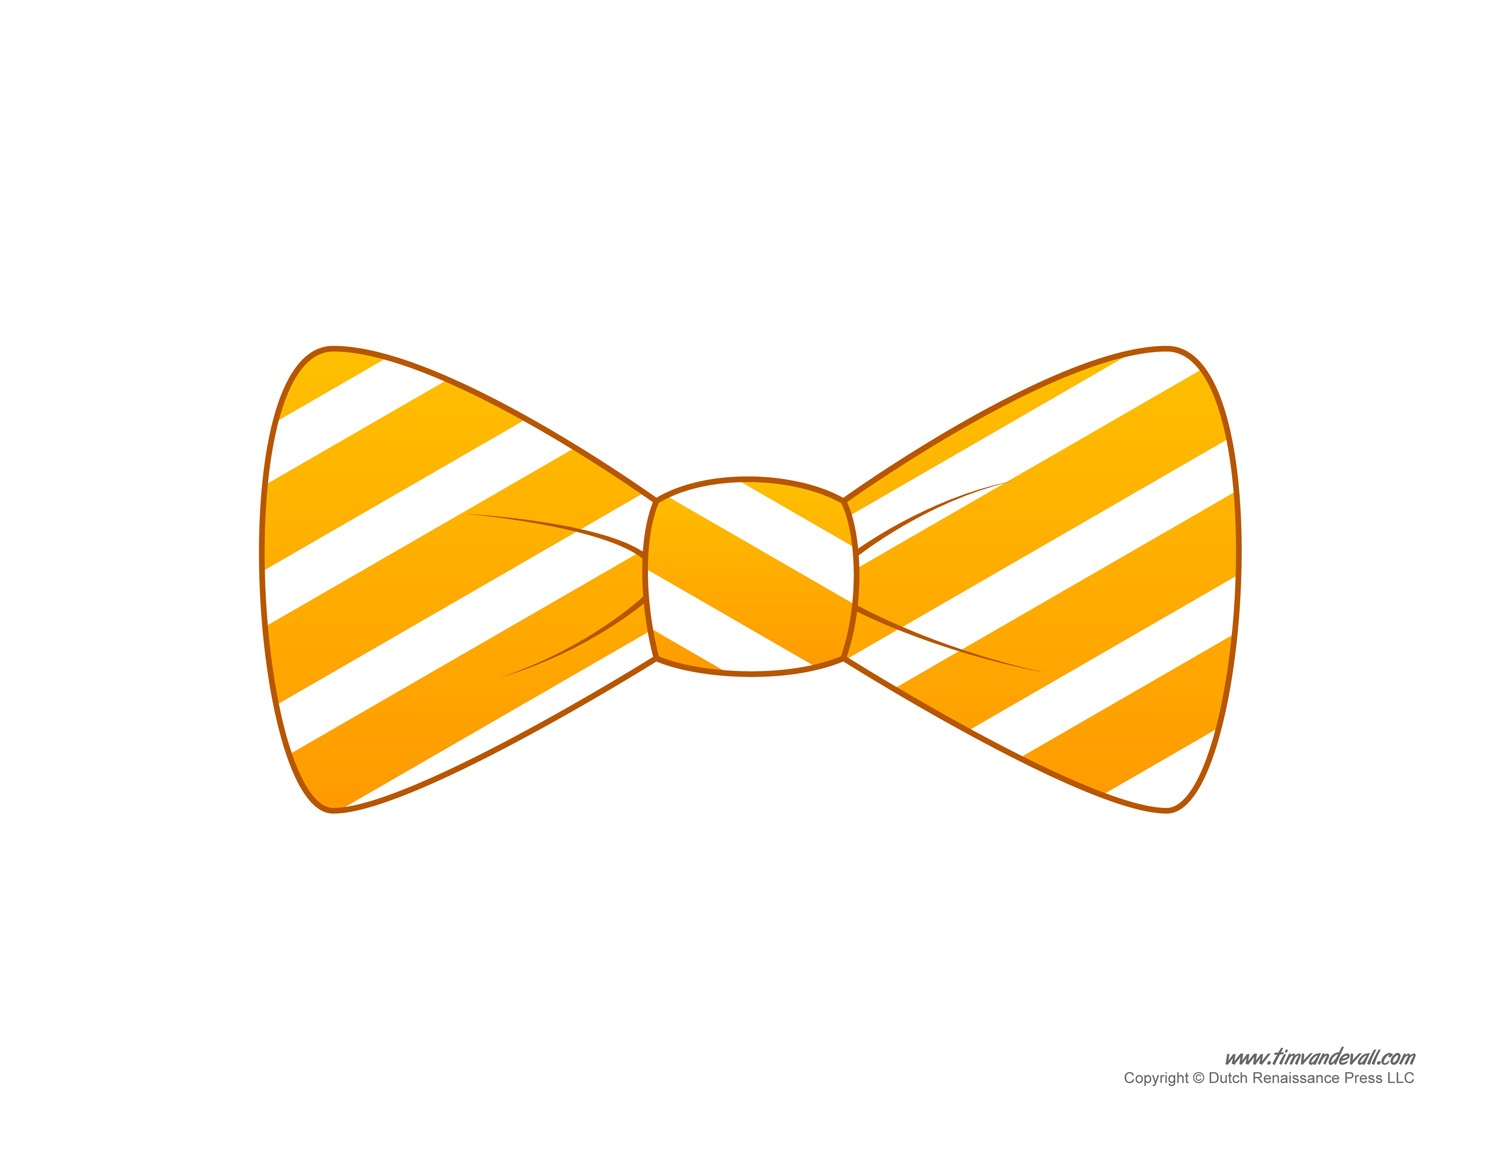 Paper Bow Tie Templates | Bow Tie Printables - Free Bow Tie Template Printable